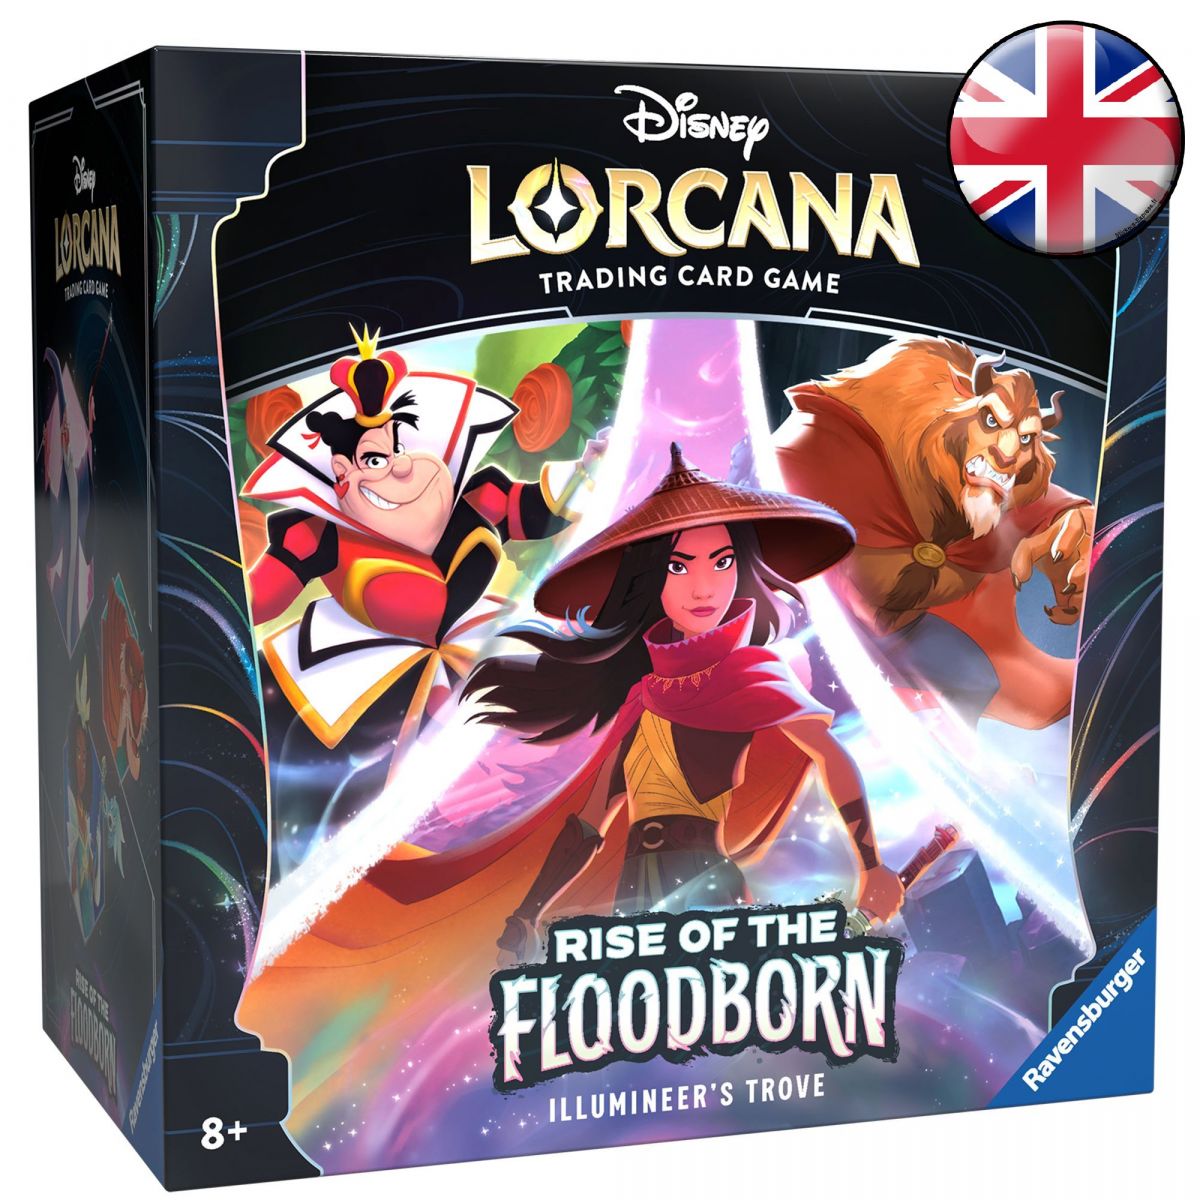 Disney Lorcana - Illuminers Trove Pack - Coffret au Trésor de L'illumineur - Chapitre 2 - L'ascension des Floodborn - EN